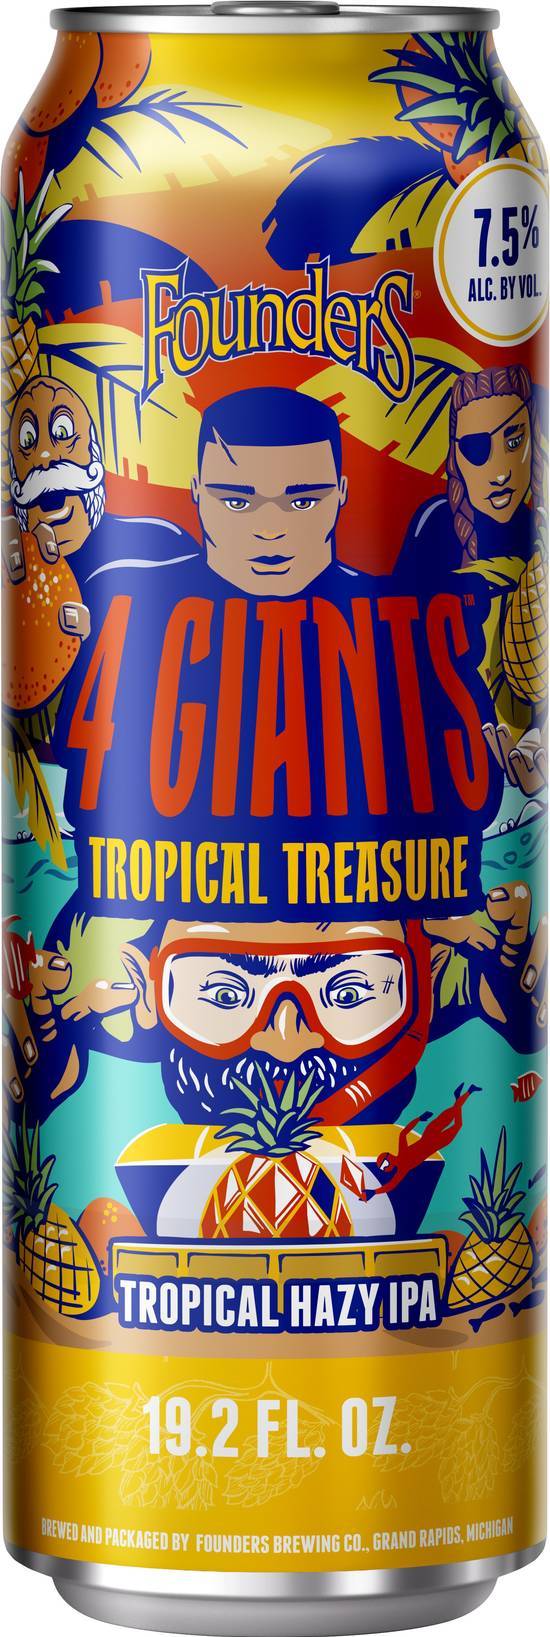 Founders 4 Giants Tropical Treasure, Tropical Hazy Ipa Beer (19.2oz can)